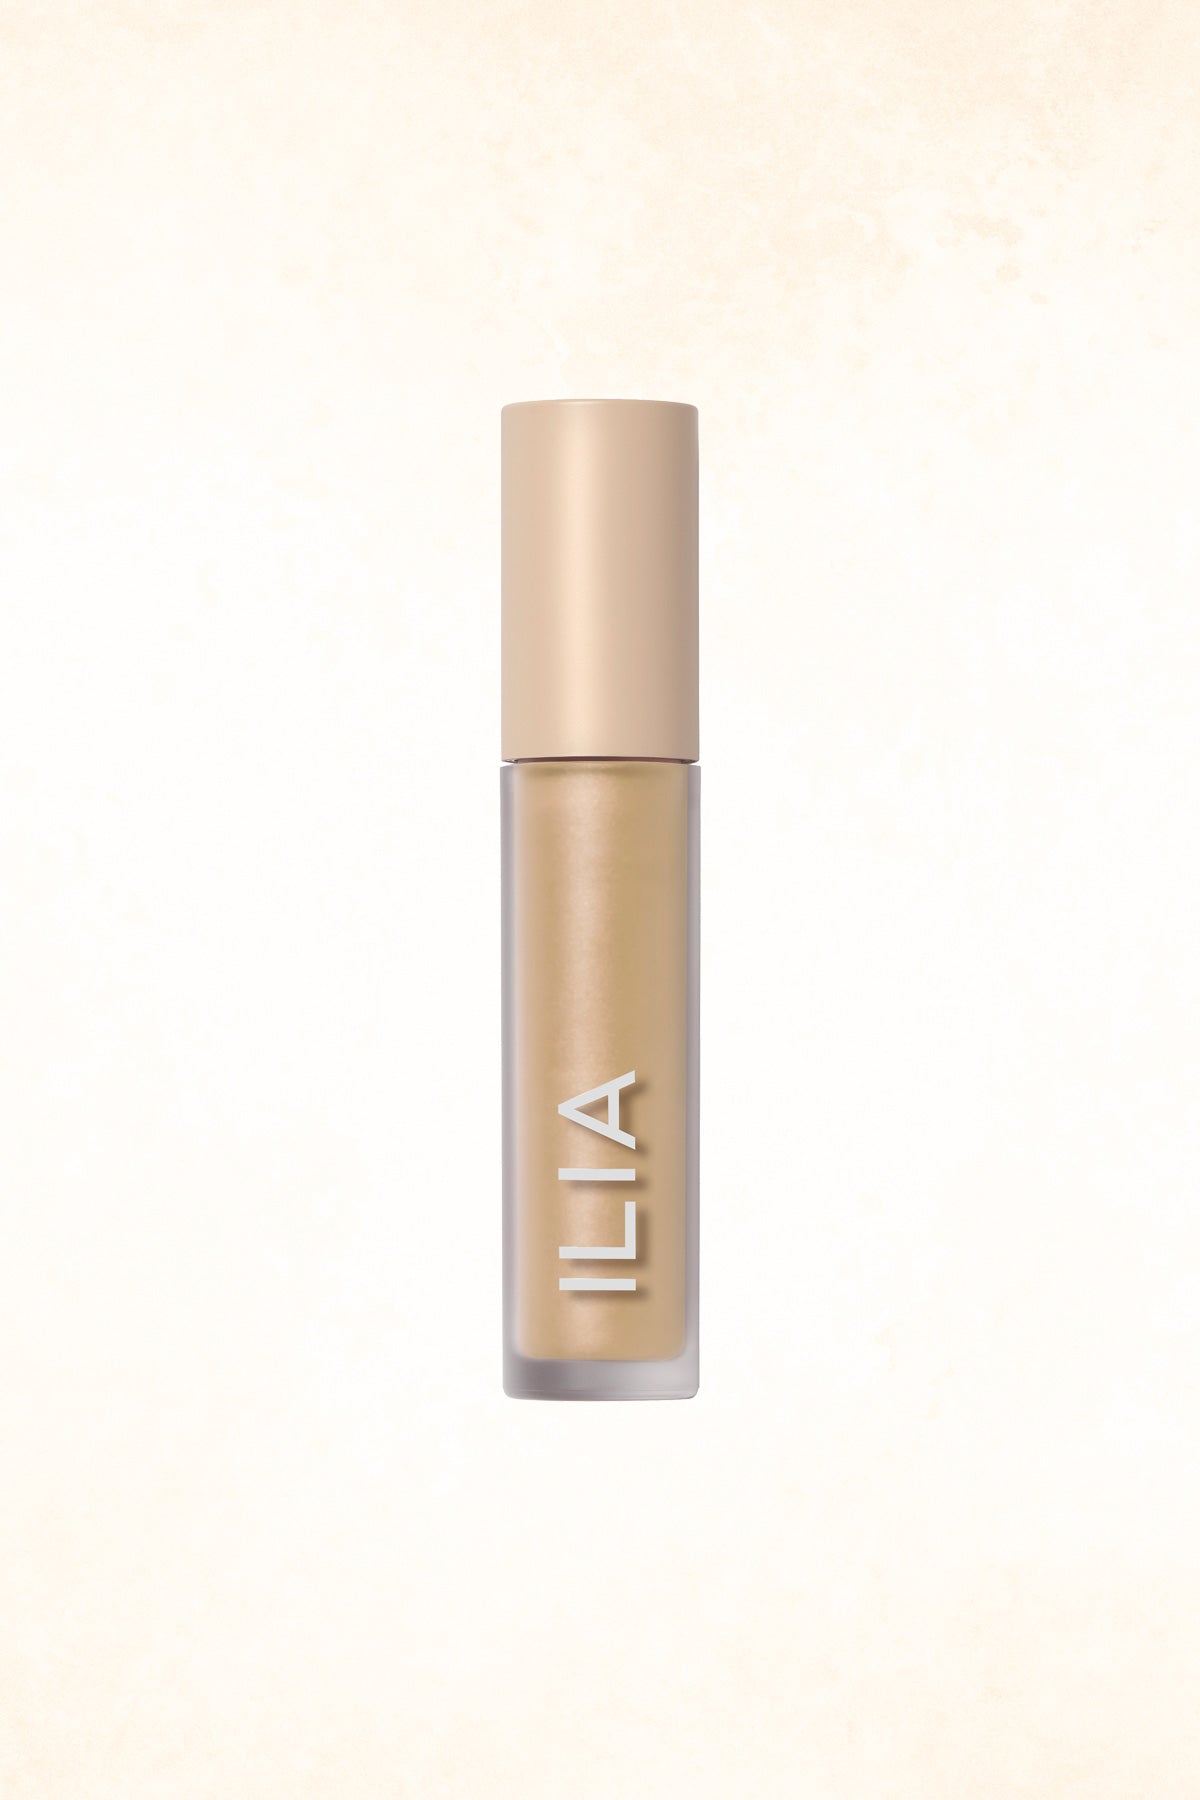 ILIA - Liquid Powder Chromatic Eye Tint - Gleam